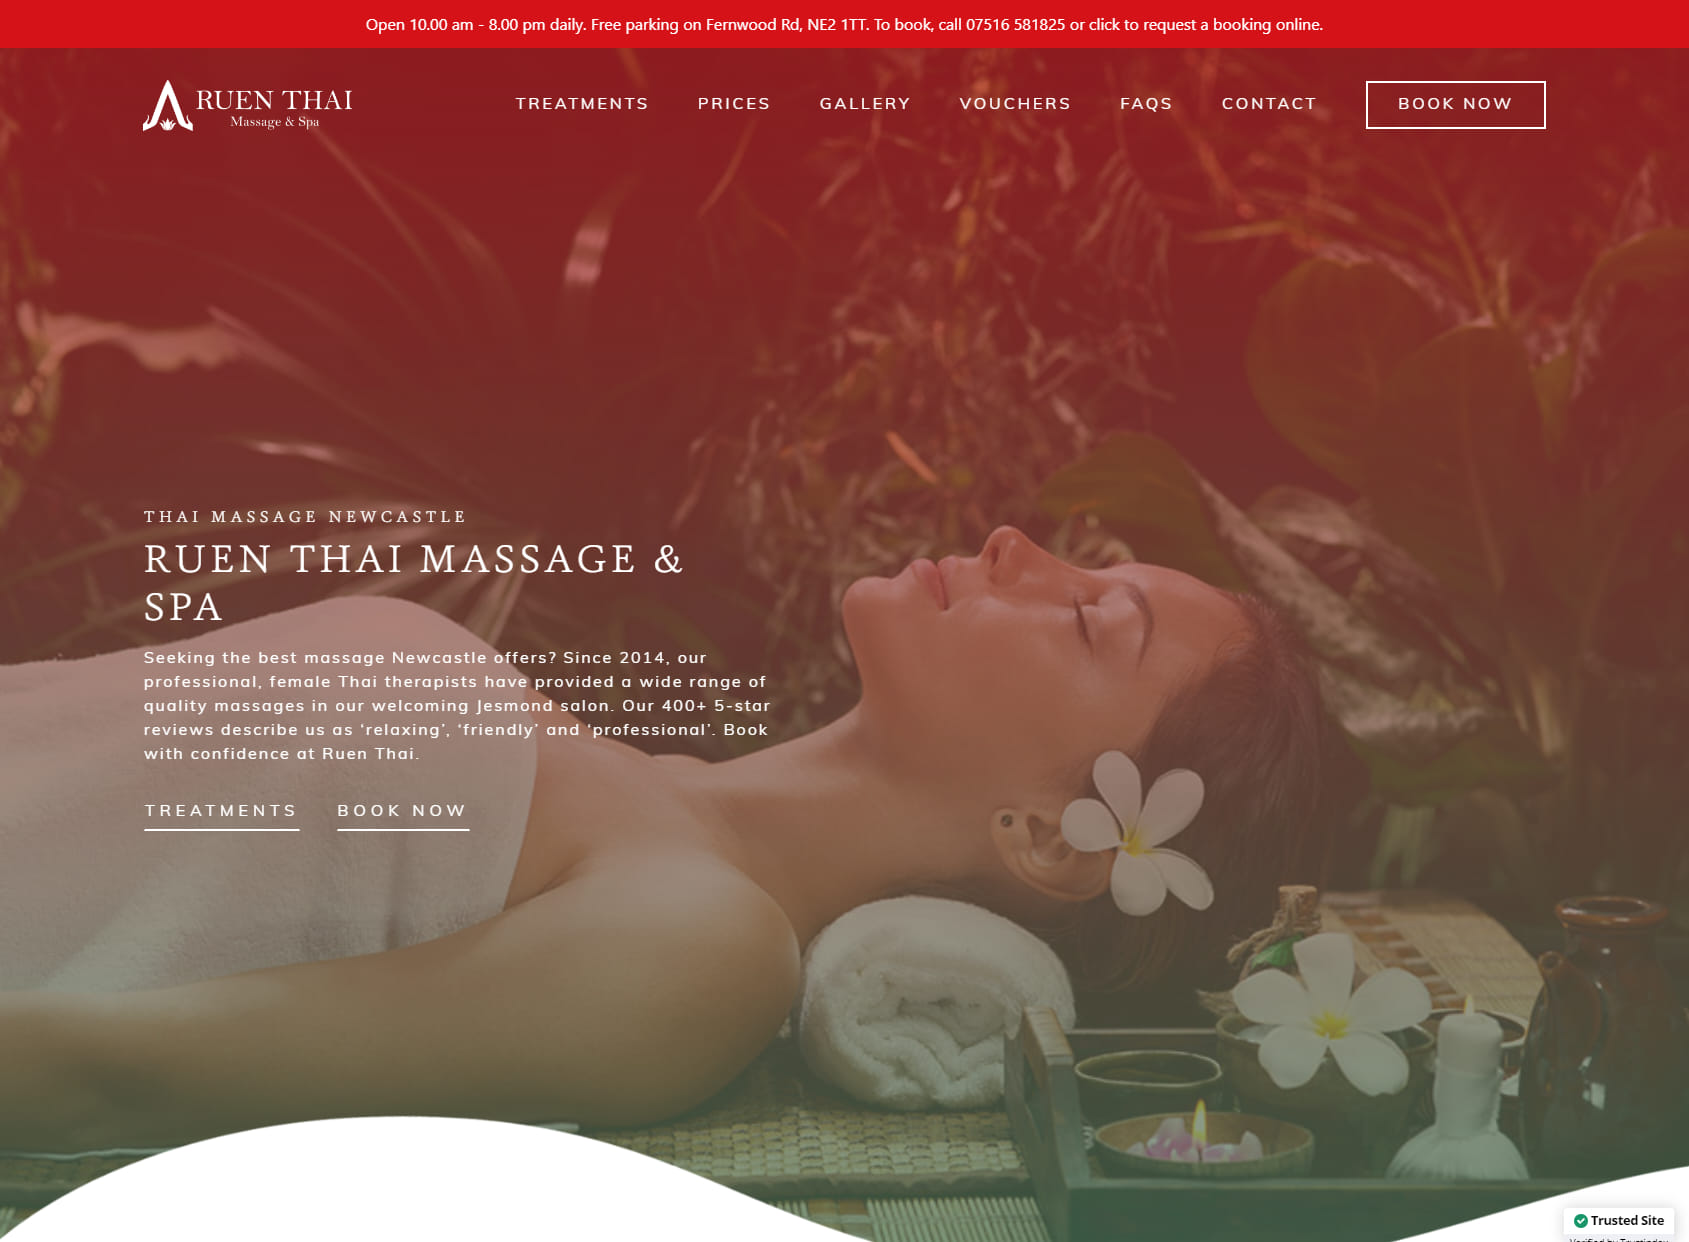 Ruen Thai Massage & Spa